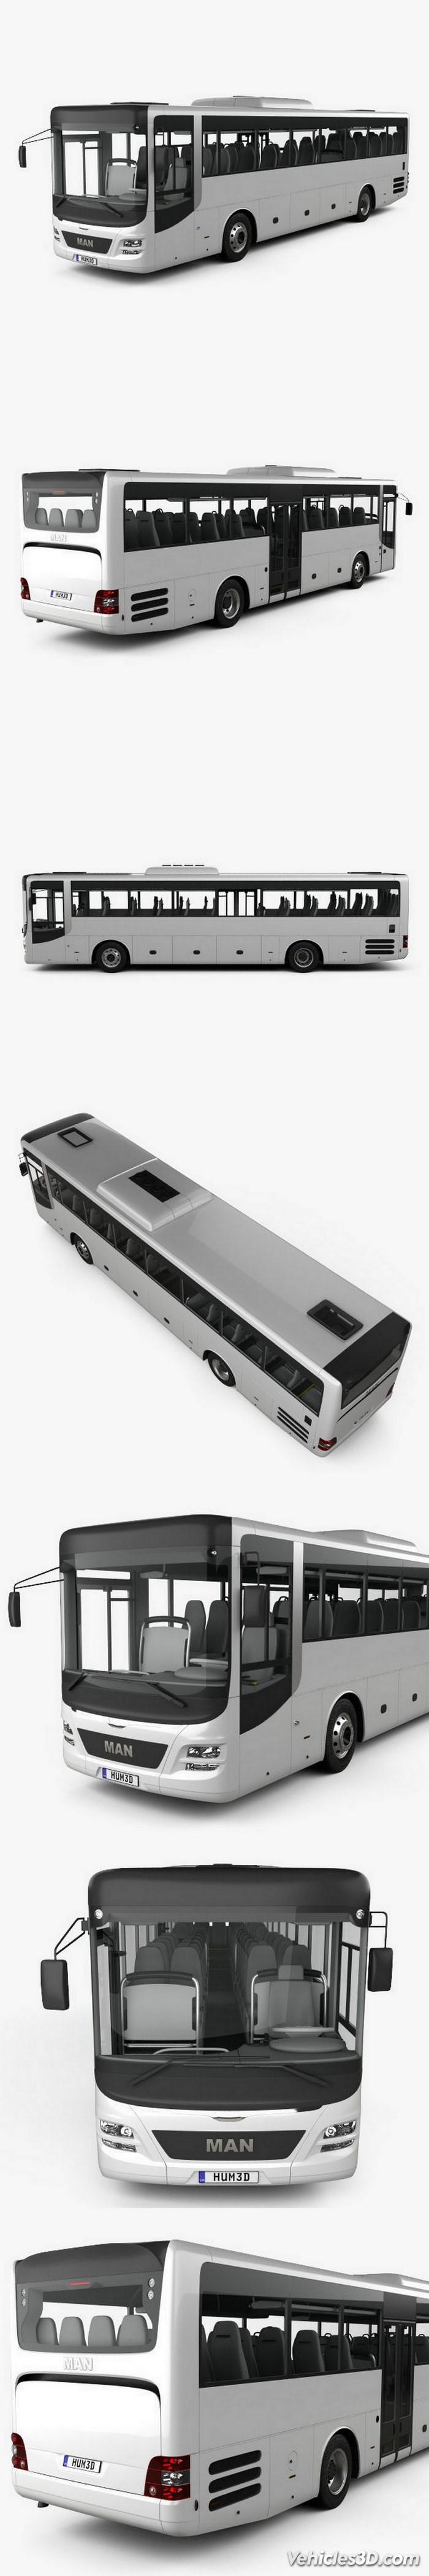 MAN Lions Intercity Bus With HQ Interior 2015 – 3D Model » Vehicles3D.com